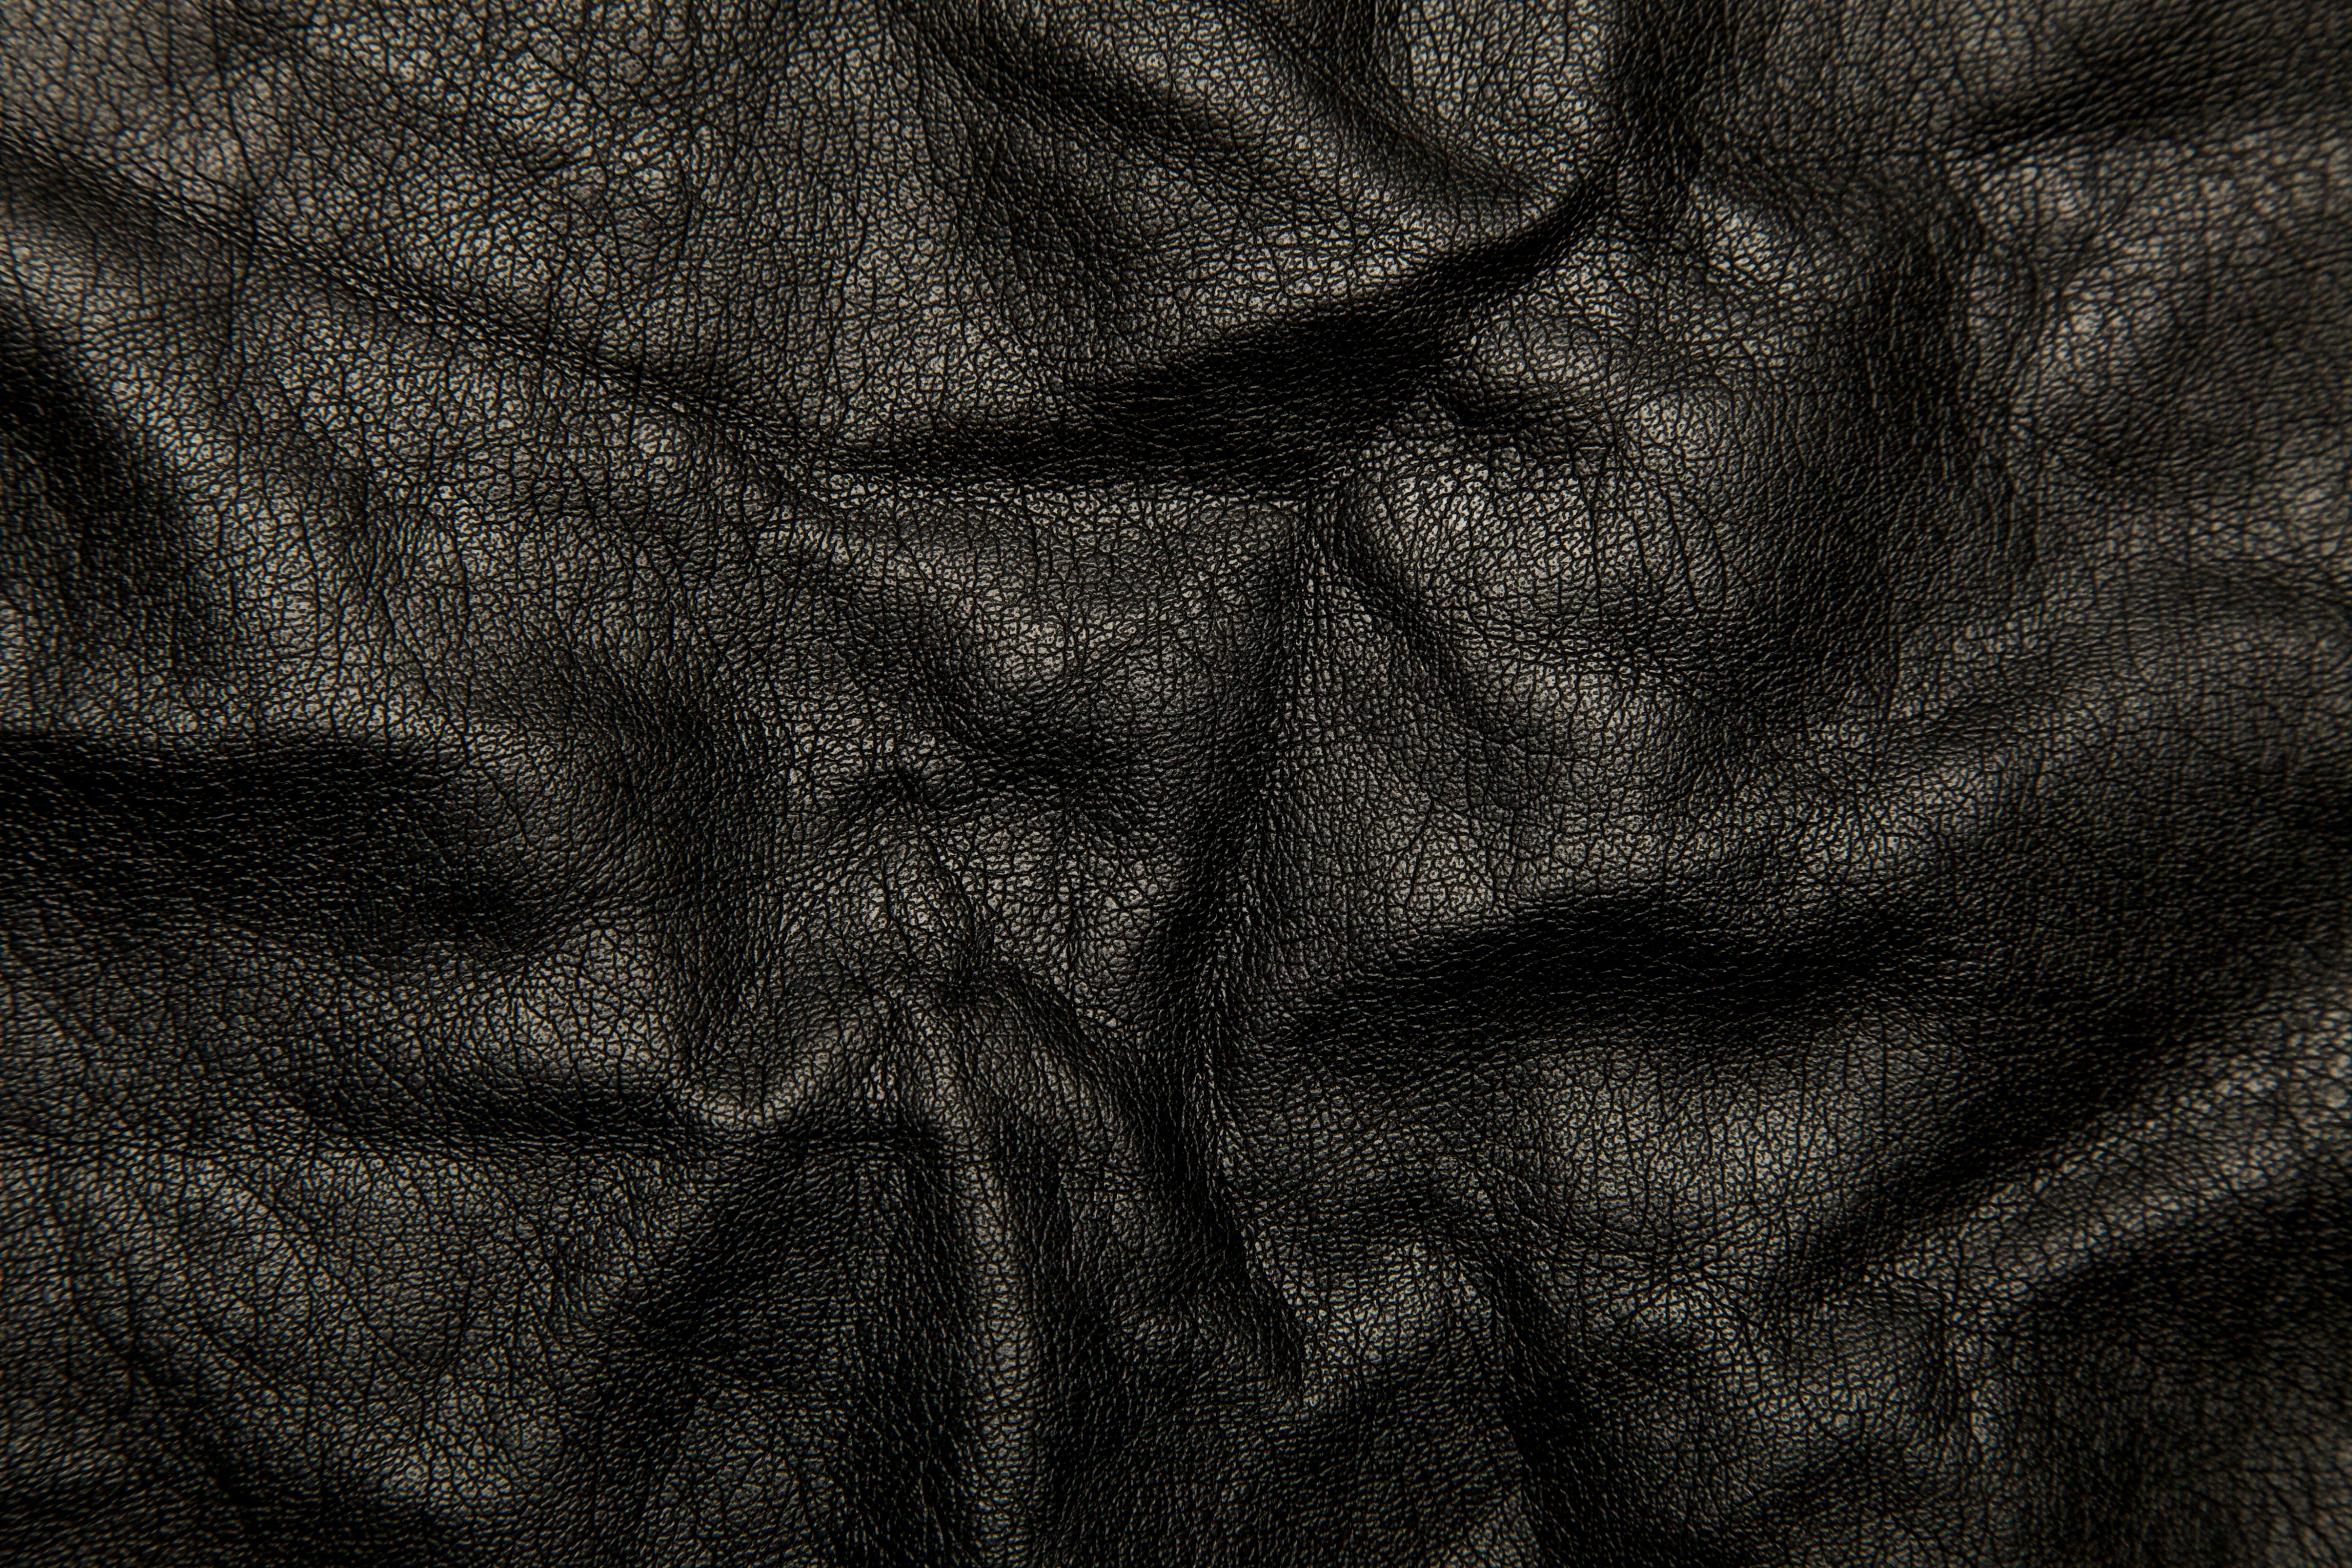 Leather black background texture wrinkles cracks wallpaper